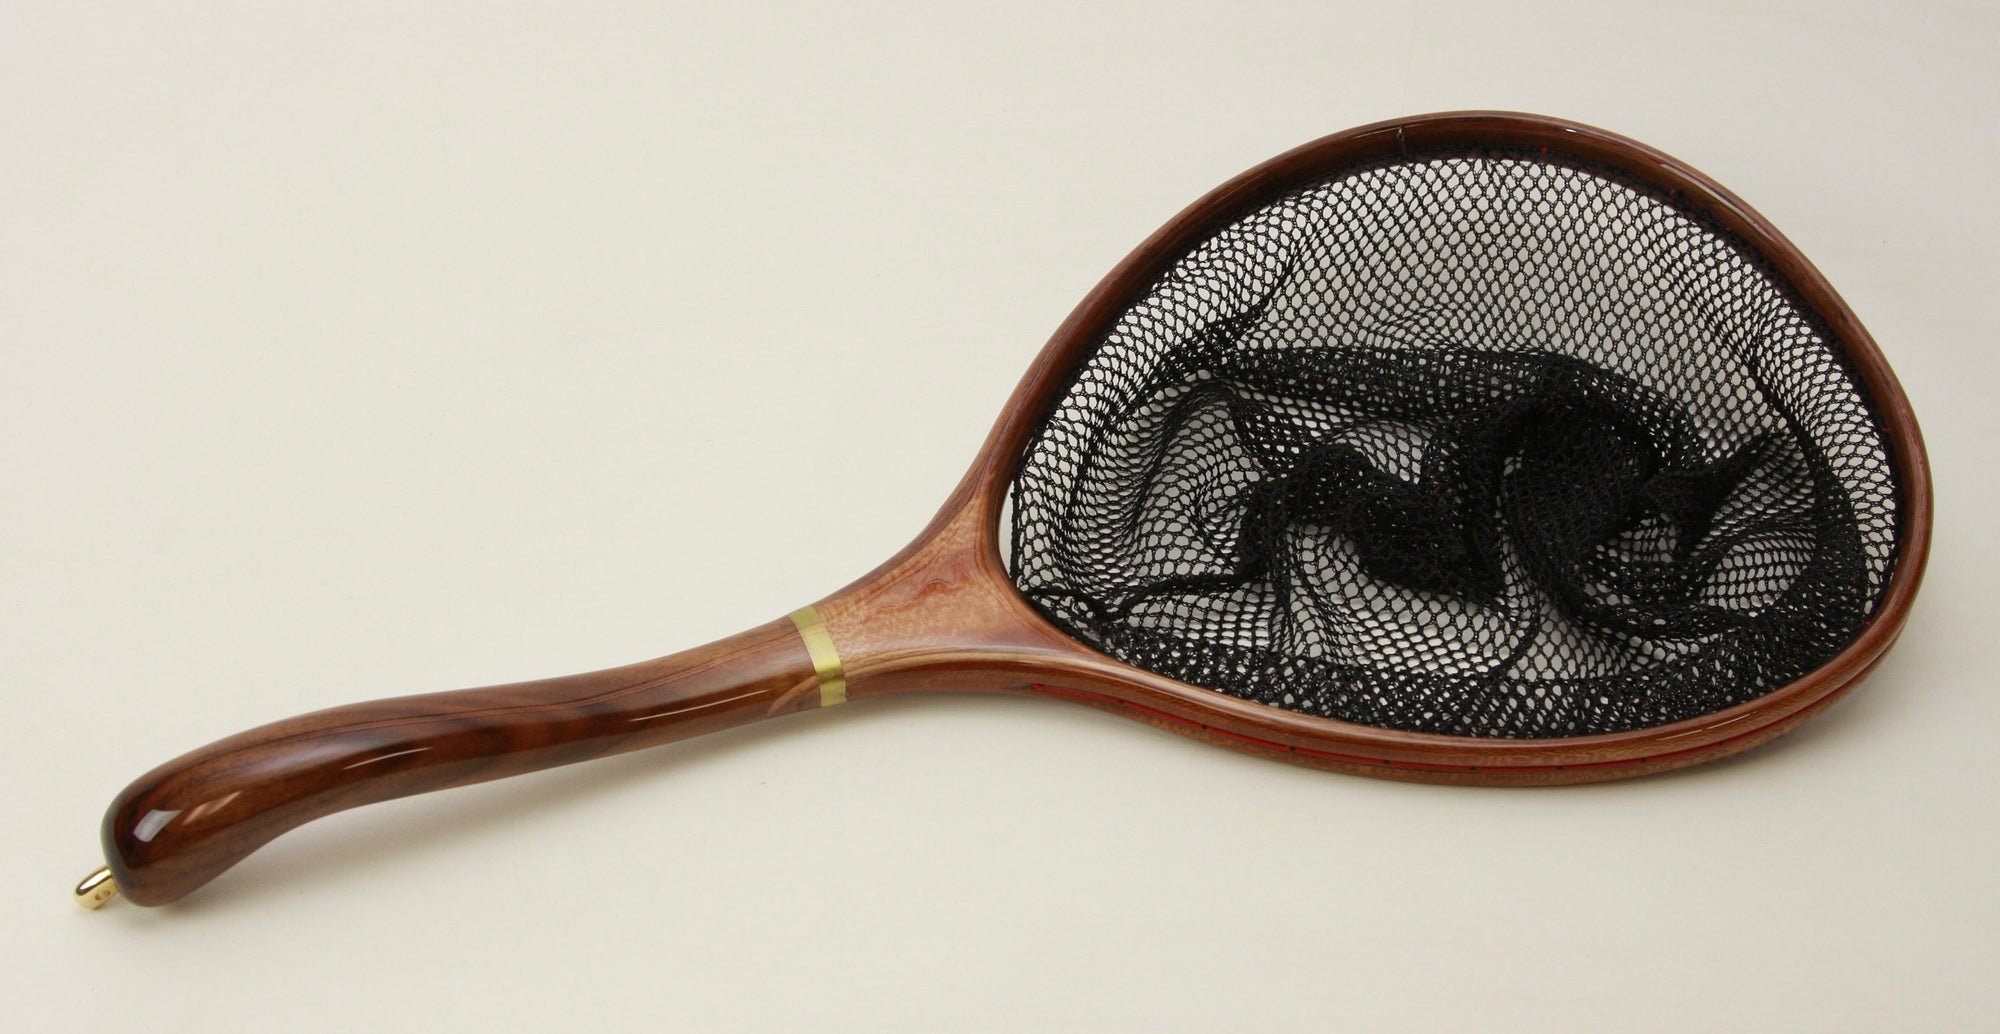 Medium sized Landing Net: The Snake handle, Sycamore and Walnut